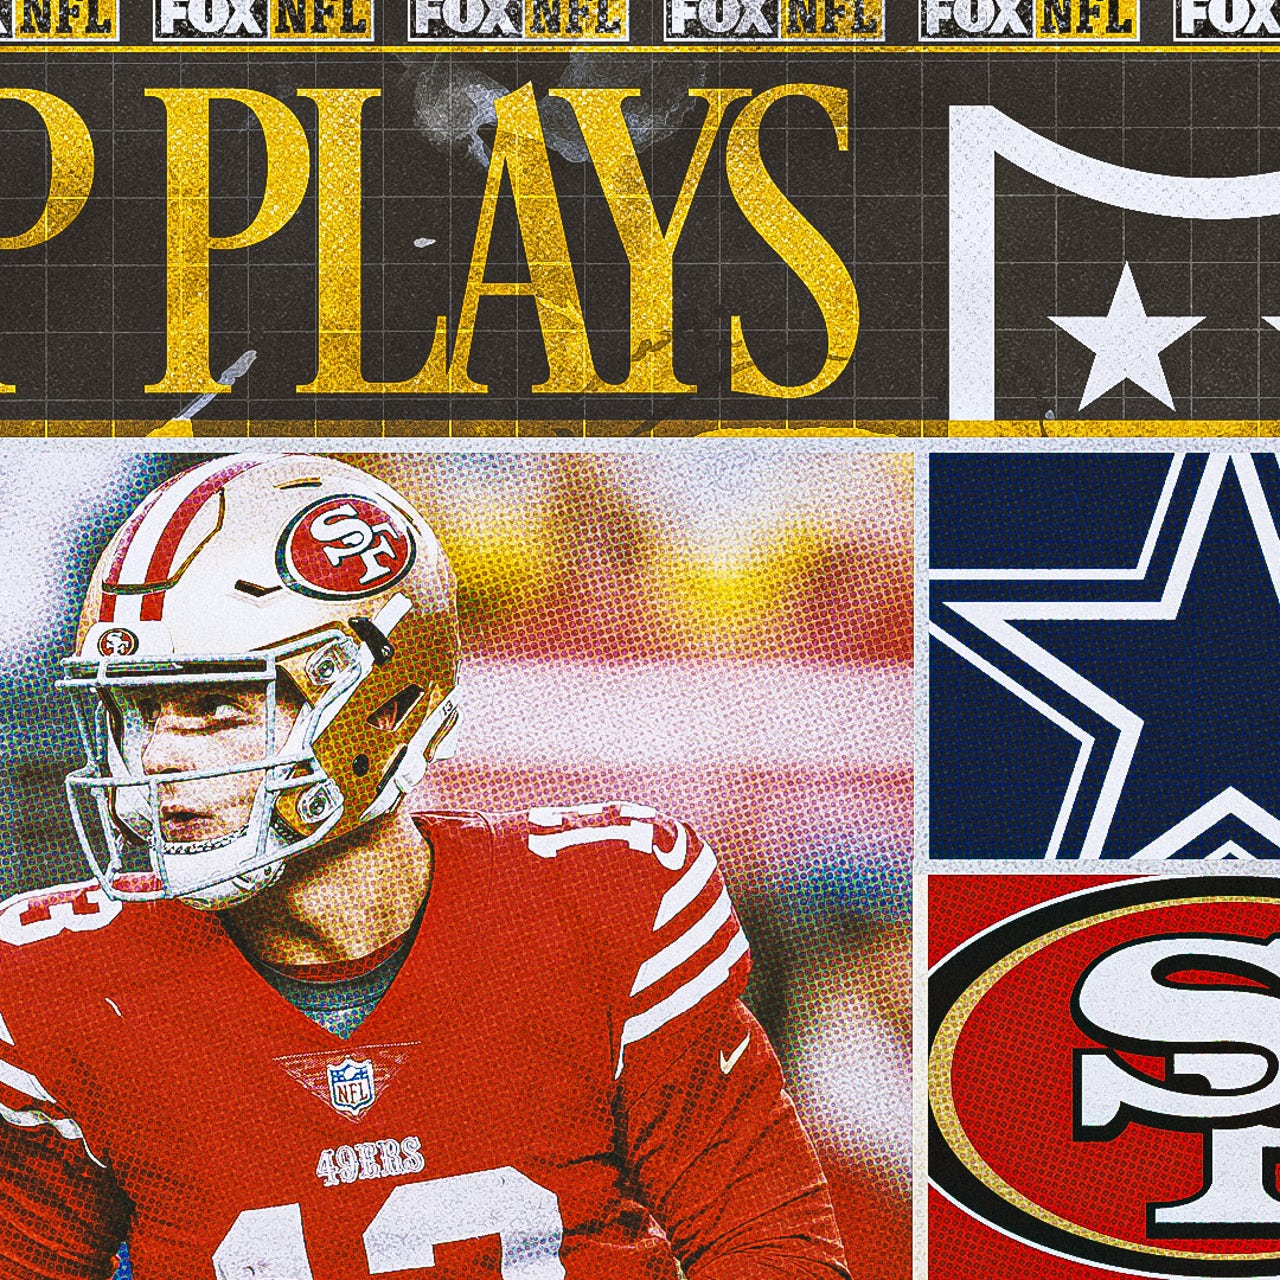 NFL Divisional Round Game Recap: San Francisco 49ers 19, Dallas Cowboys 12, NFL News, Rankings and Statistics